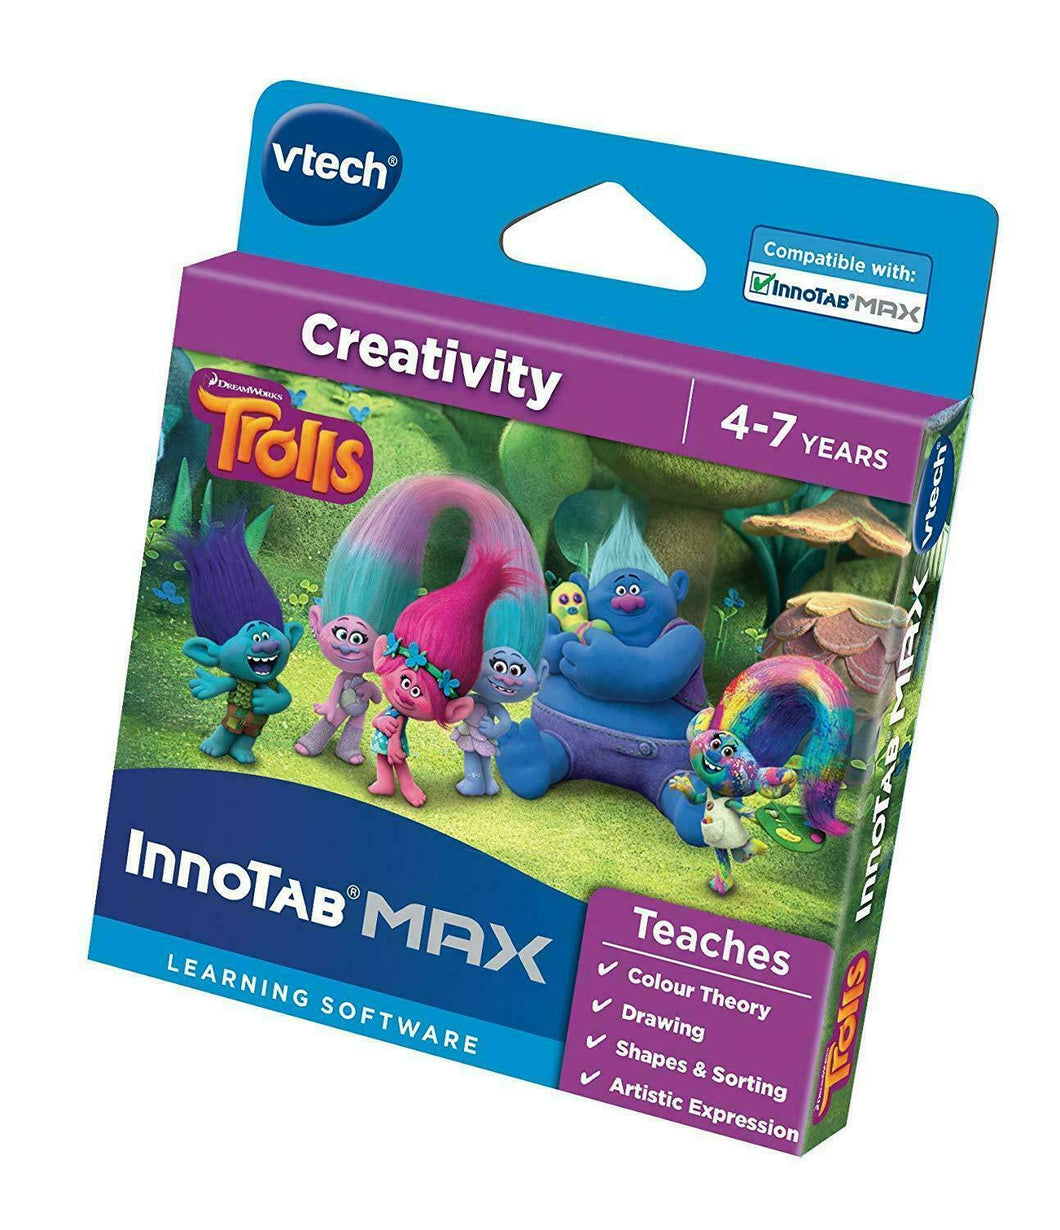 Software VTech Innotab Max Trolls pro výuku kreativity